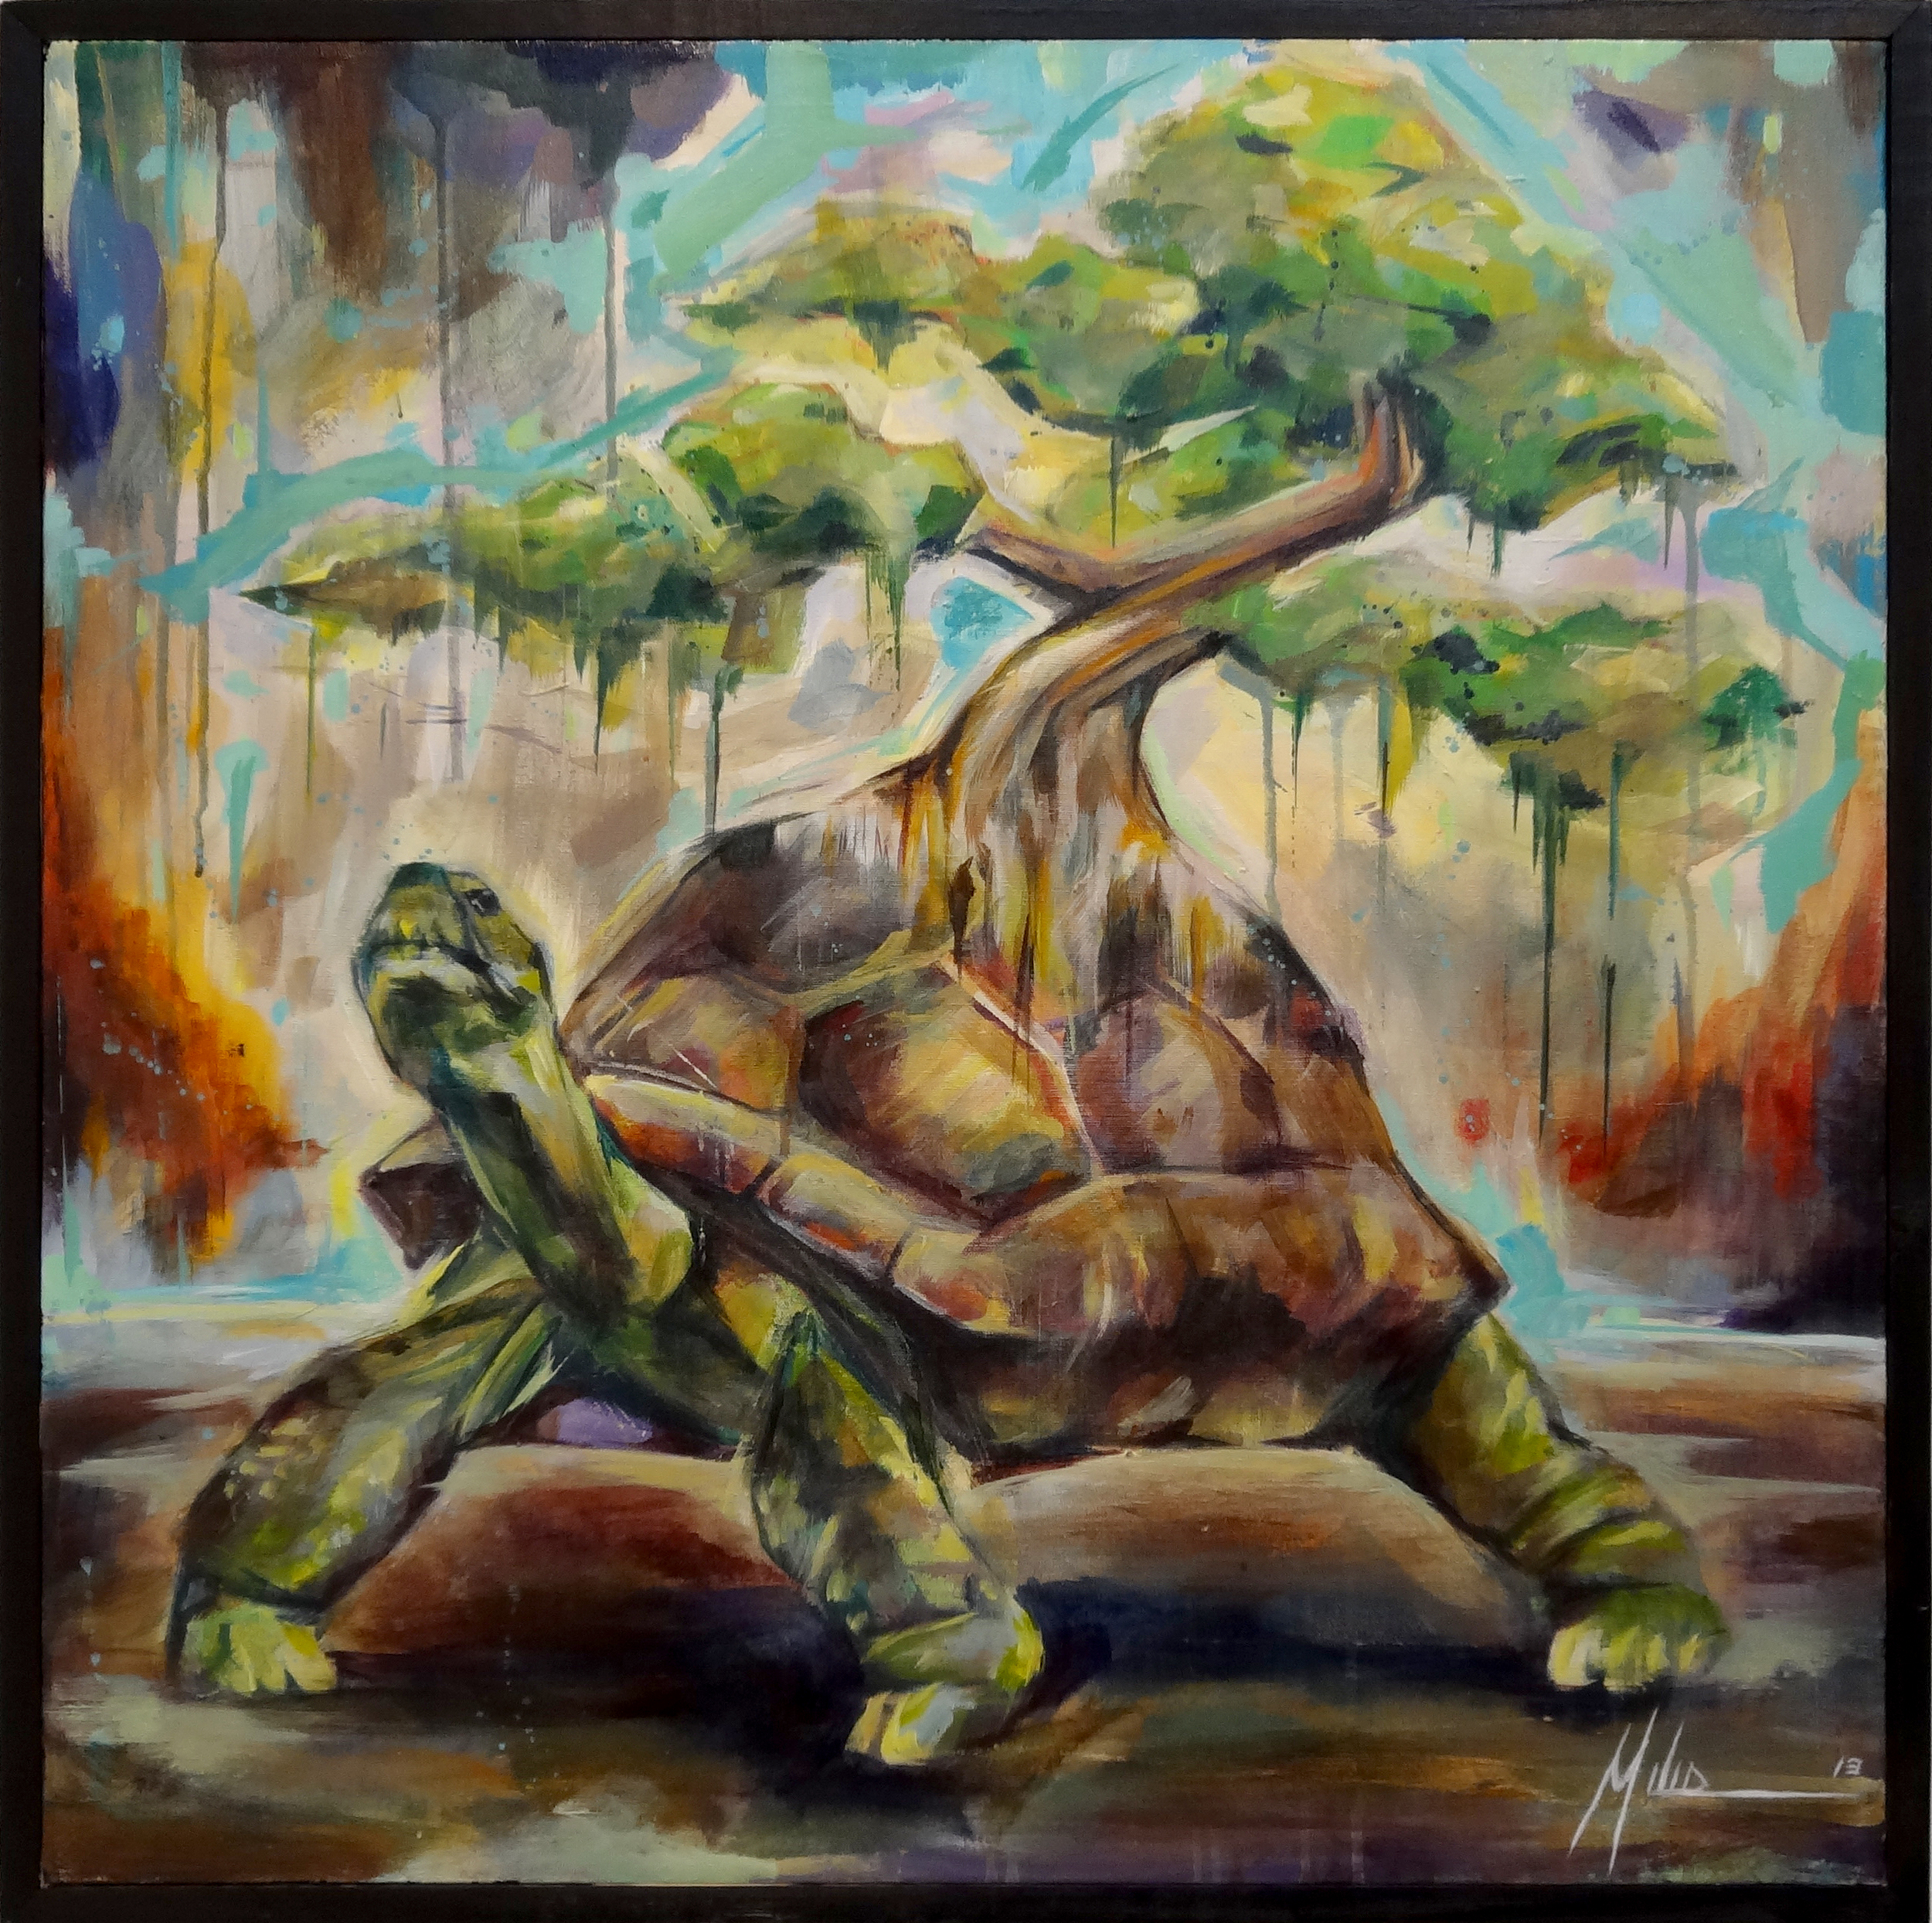  World Tortoise  acrylic on canvas  30” x 30”  2013 